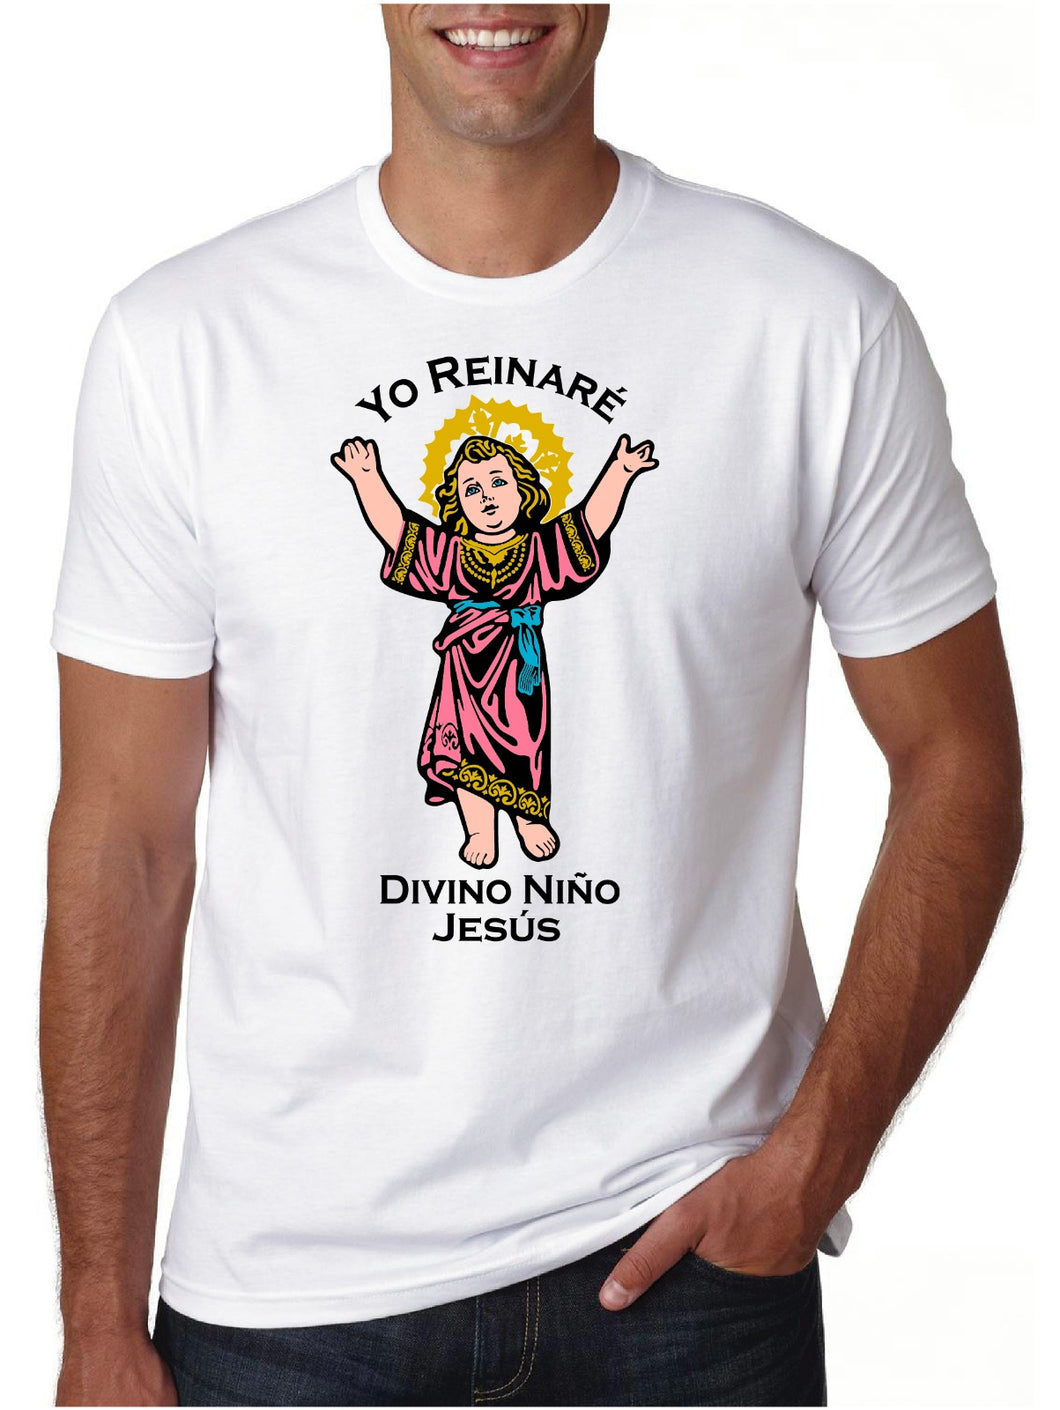 Yo Reinare - Divino Nino Jesus T-shirt - greatsalesontheweb